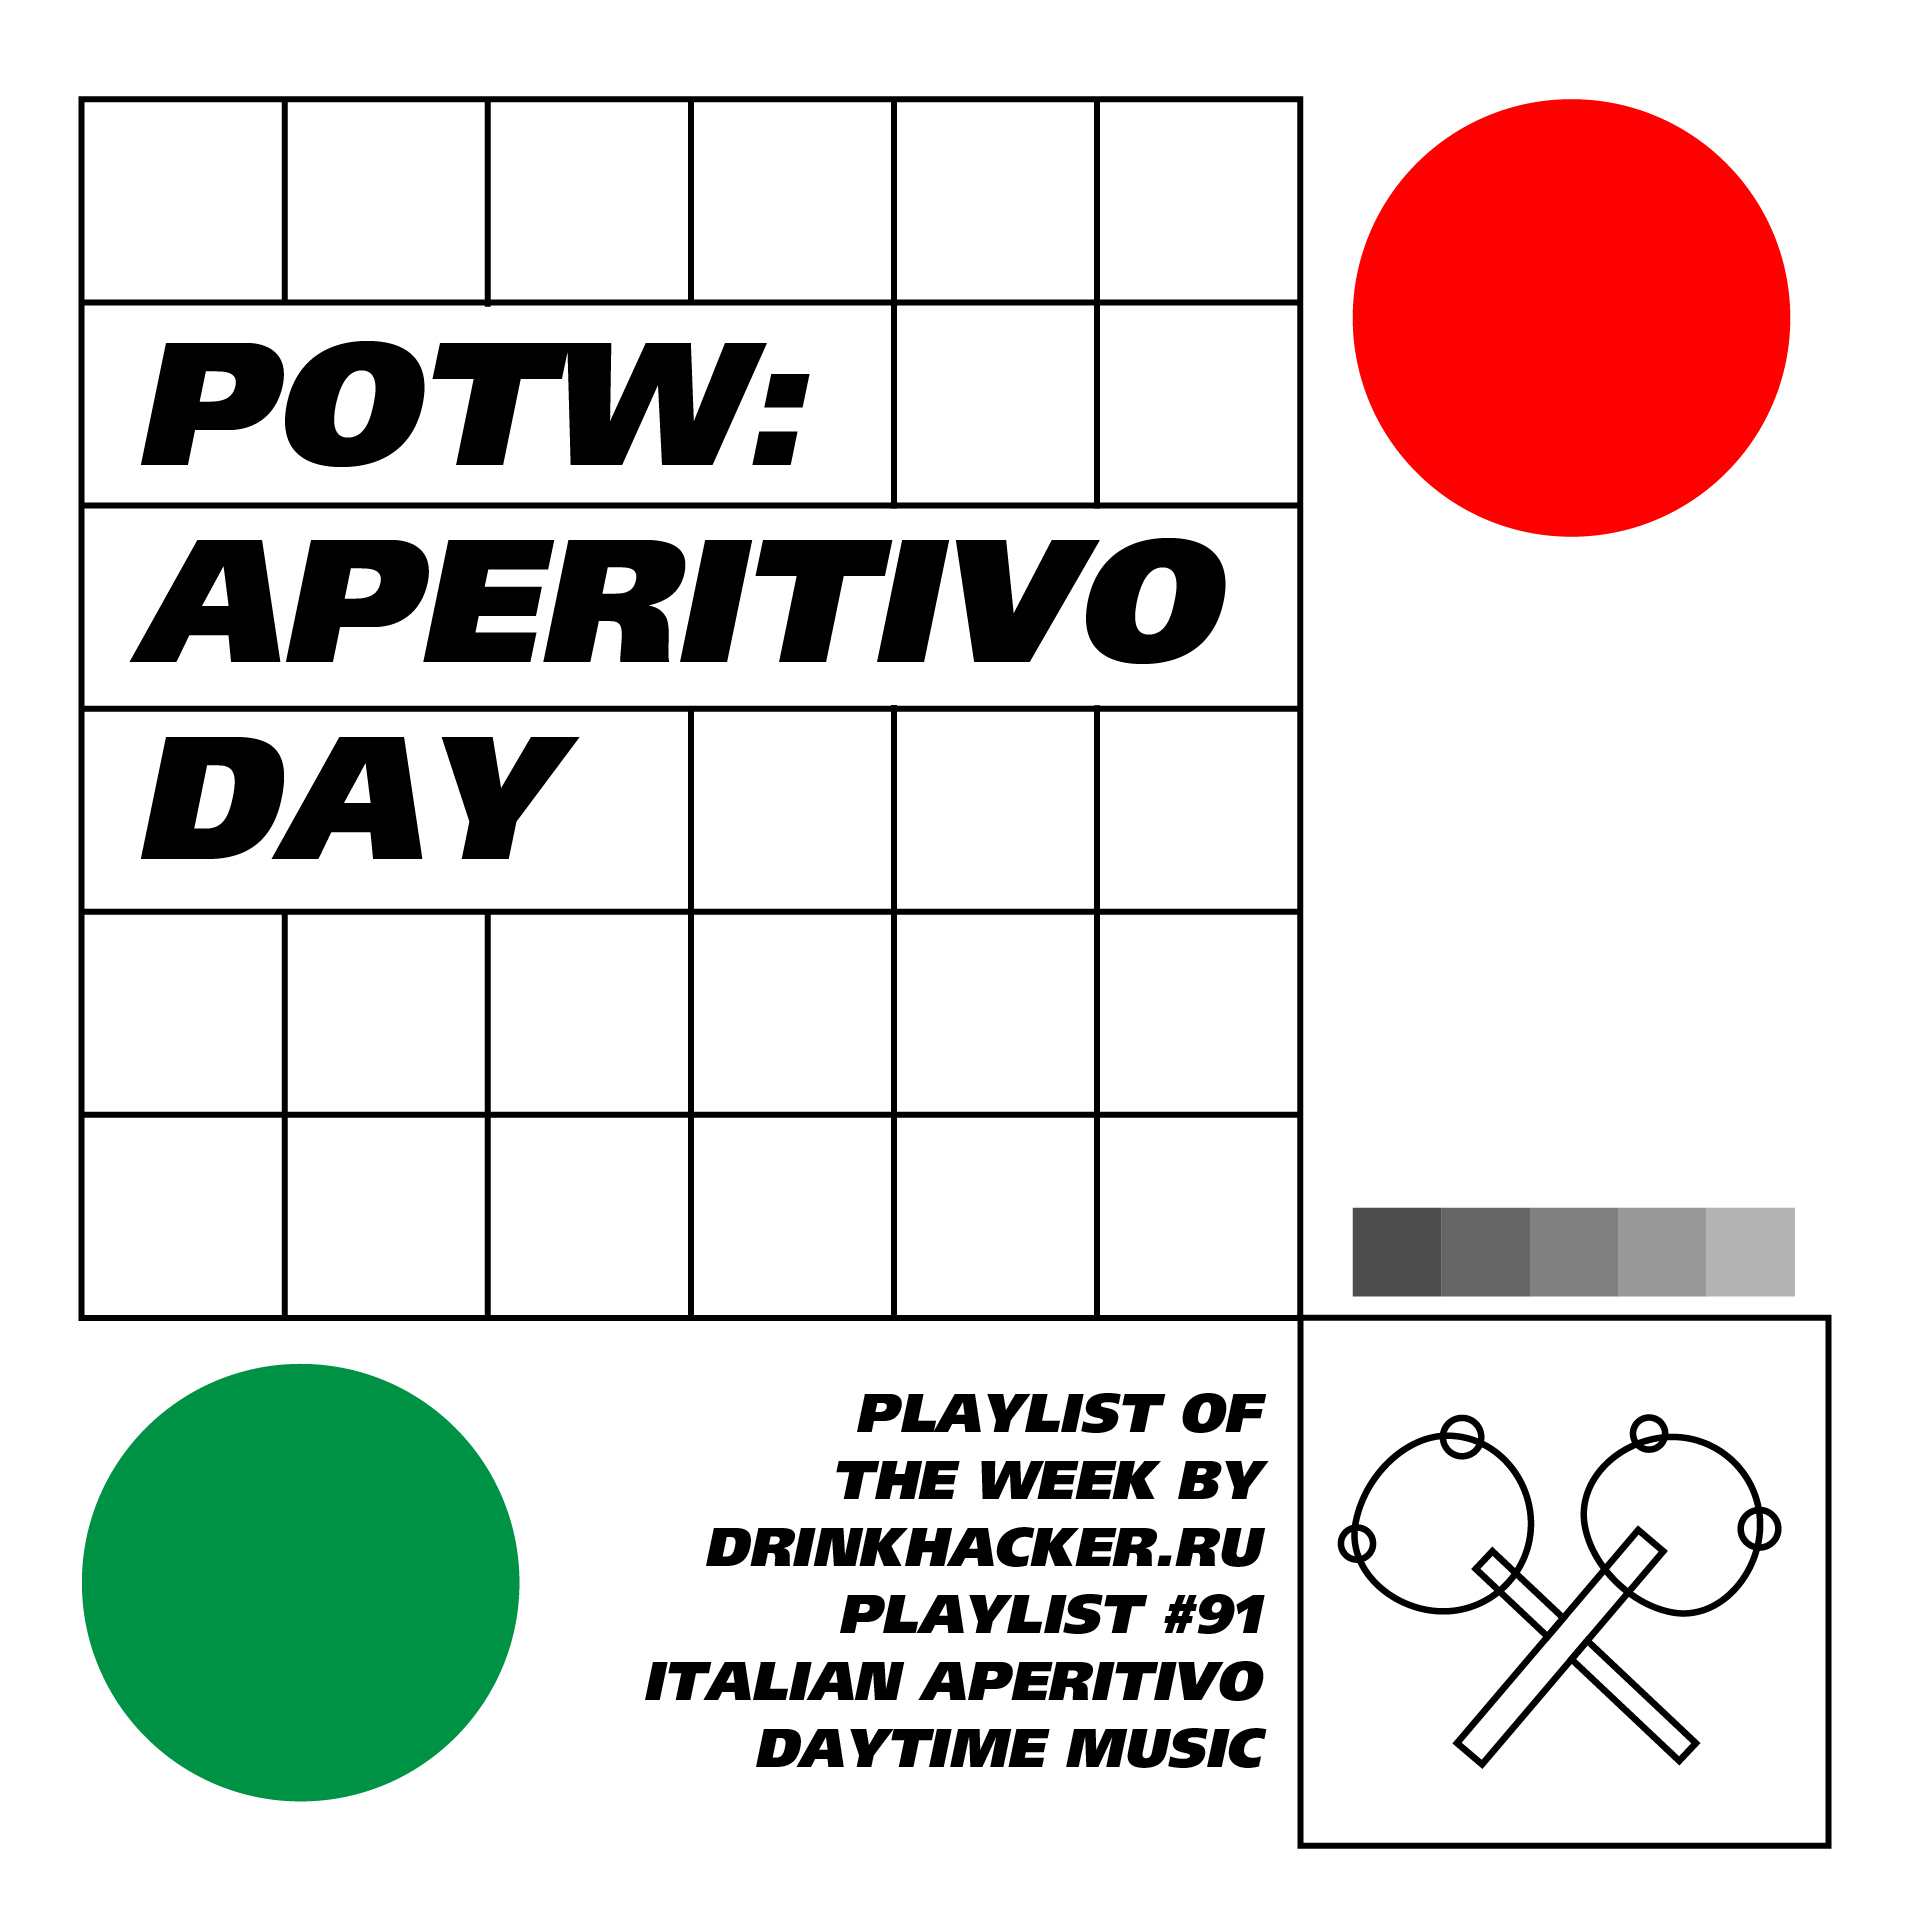 POTW: 091 (Italian aperitivo daytime music)